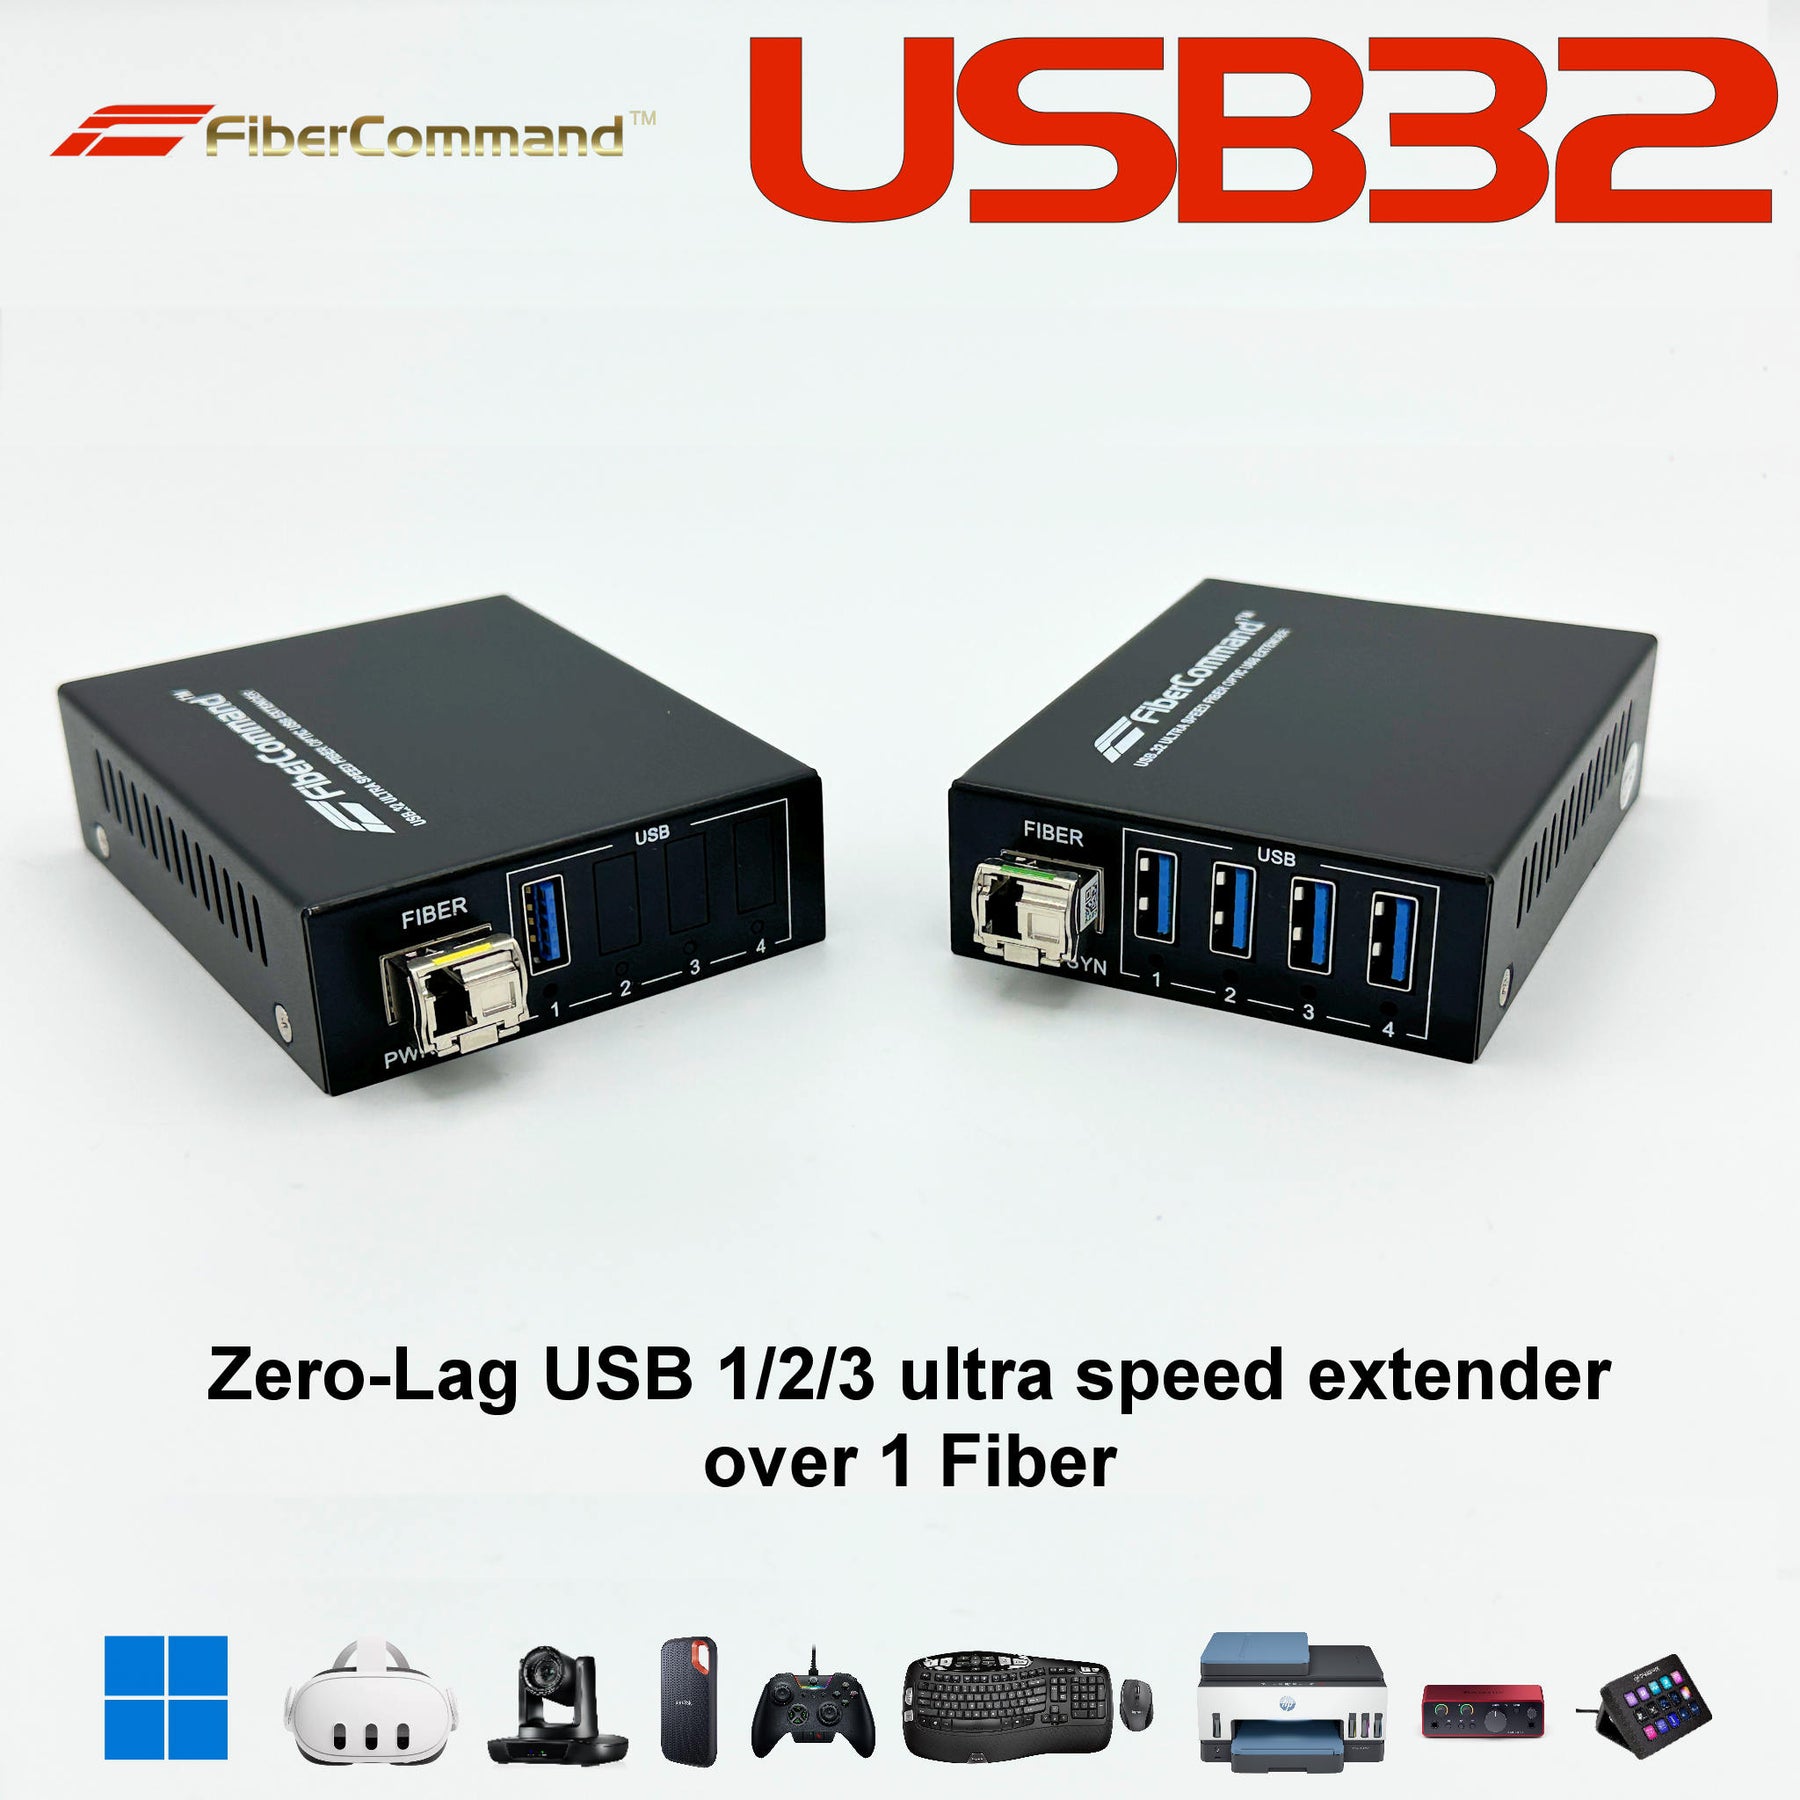 ubs-c usb-3 ultra speed extender for work or gaming over single fiber